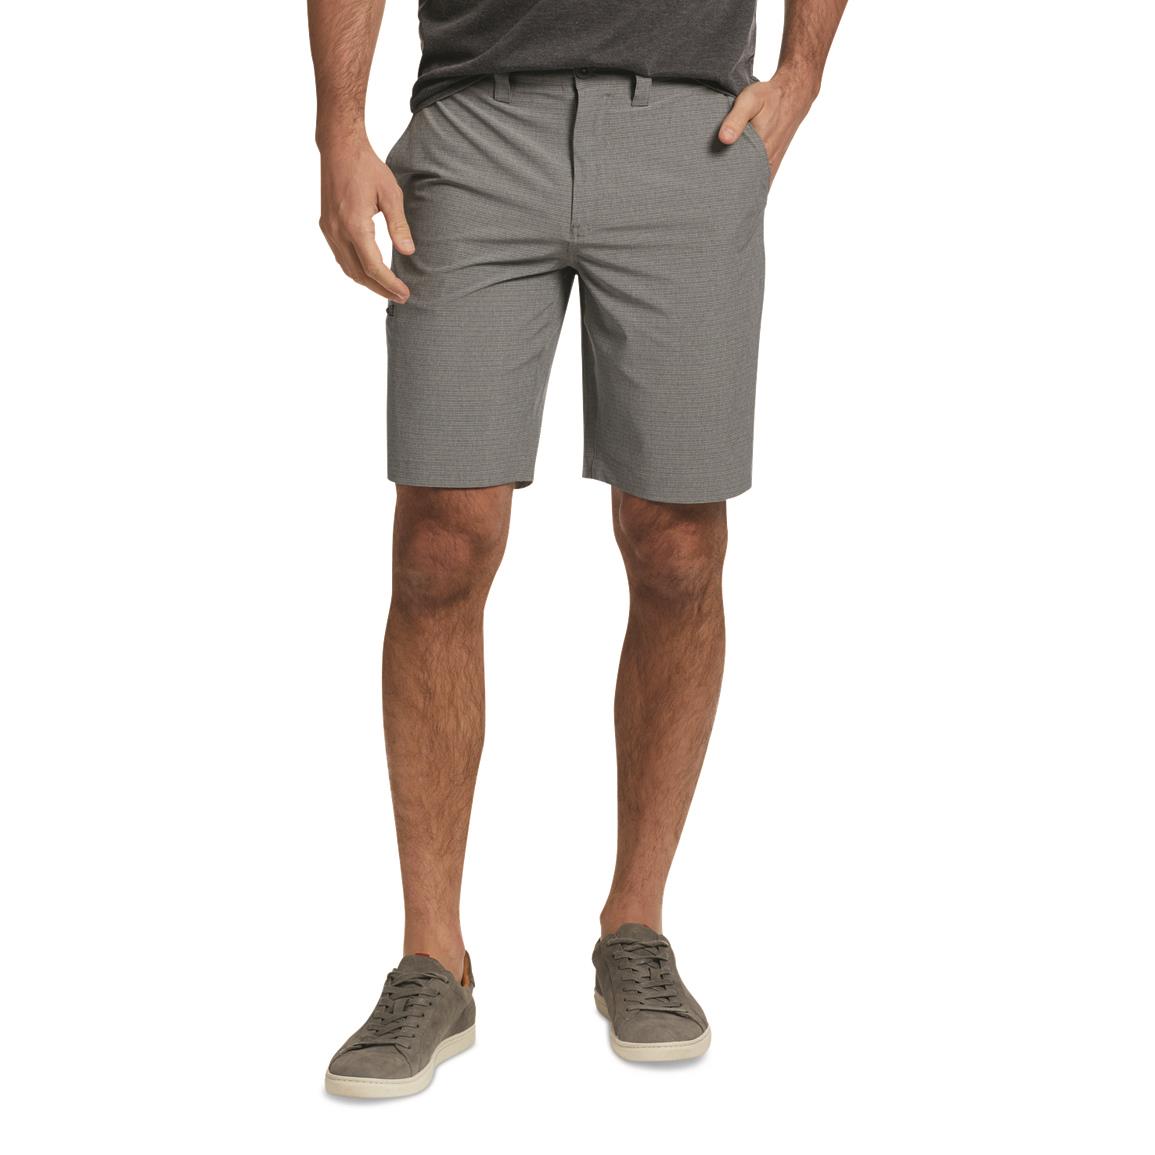 Flag & Anthem Men's MadeFlex Any-Wear Hybrid Shorts, Charcoal